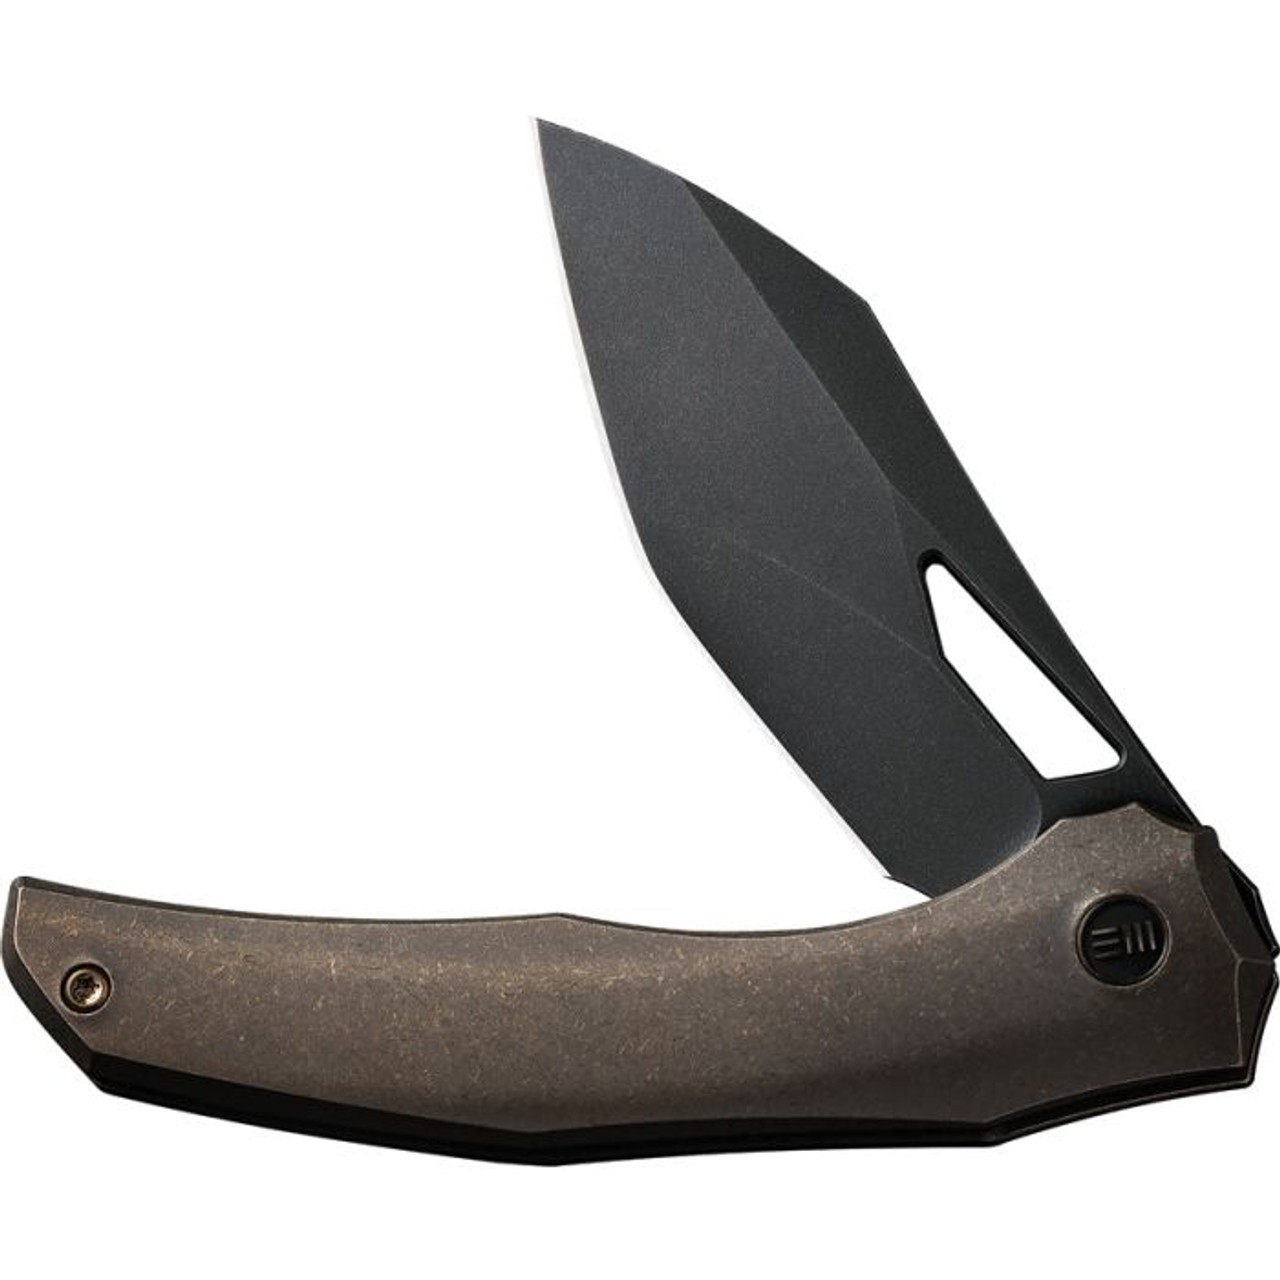 WE Knife Ignio Bronze (WE22042B2) 3.30" CPM-20CV Black Stonewashed Drop Point Plain Blade, Bronze Titanium Handle